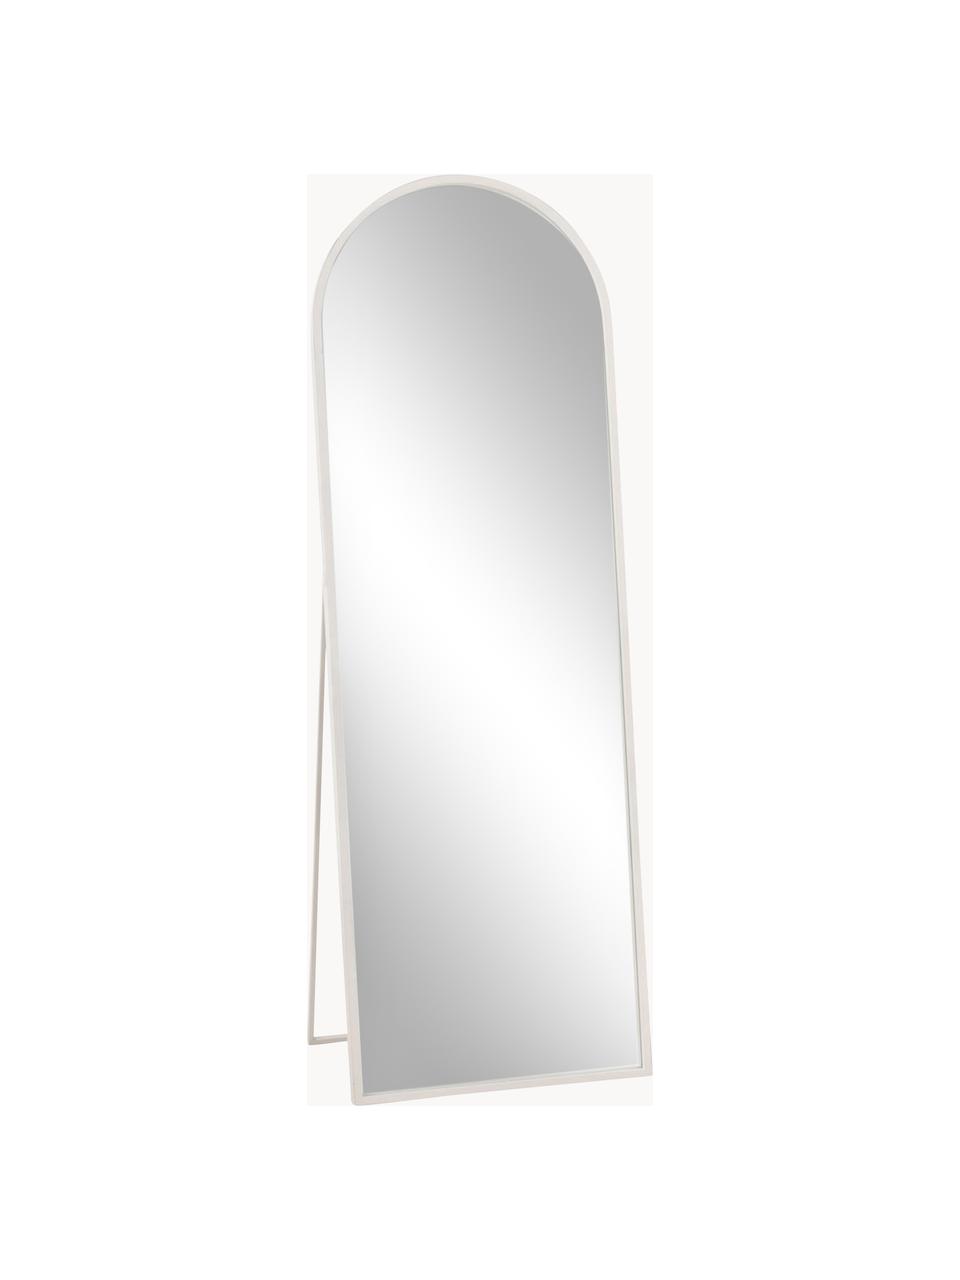 Vloerspiegel Espelho, Frame: gecoat metaal, Spiegelglas: glas, Wit, B 51 x H 148 cm